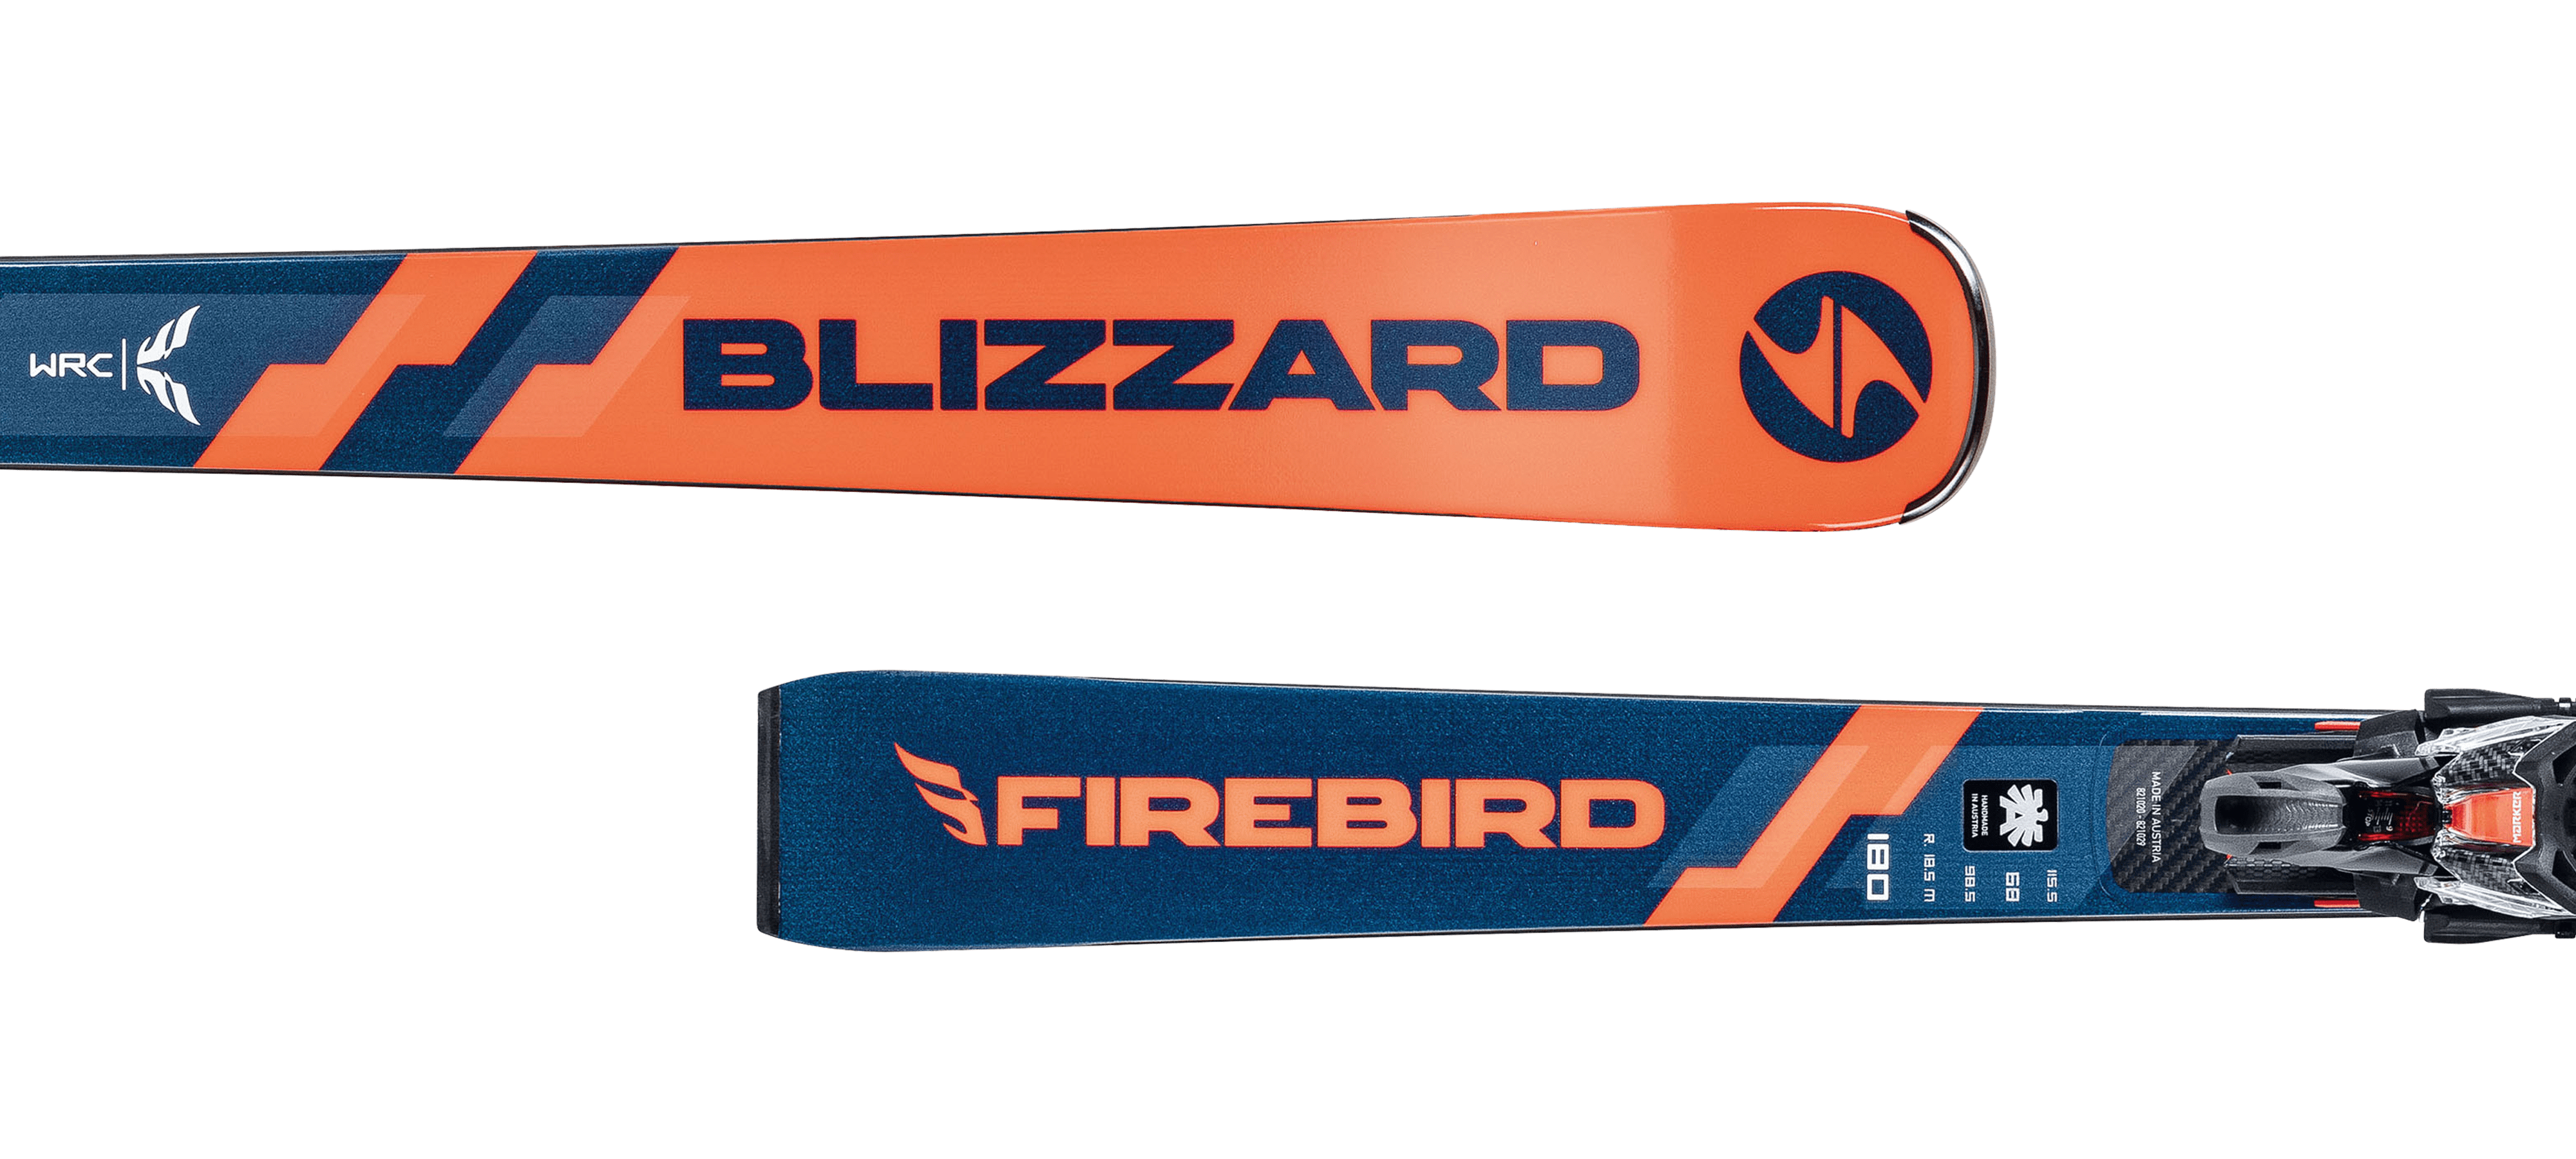 XCELL 12 Demo Race Carver Ski Set 175 180 Blizzard Firebird WRC 2019 